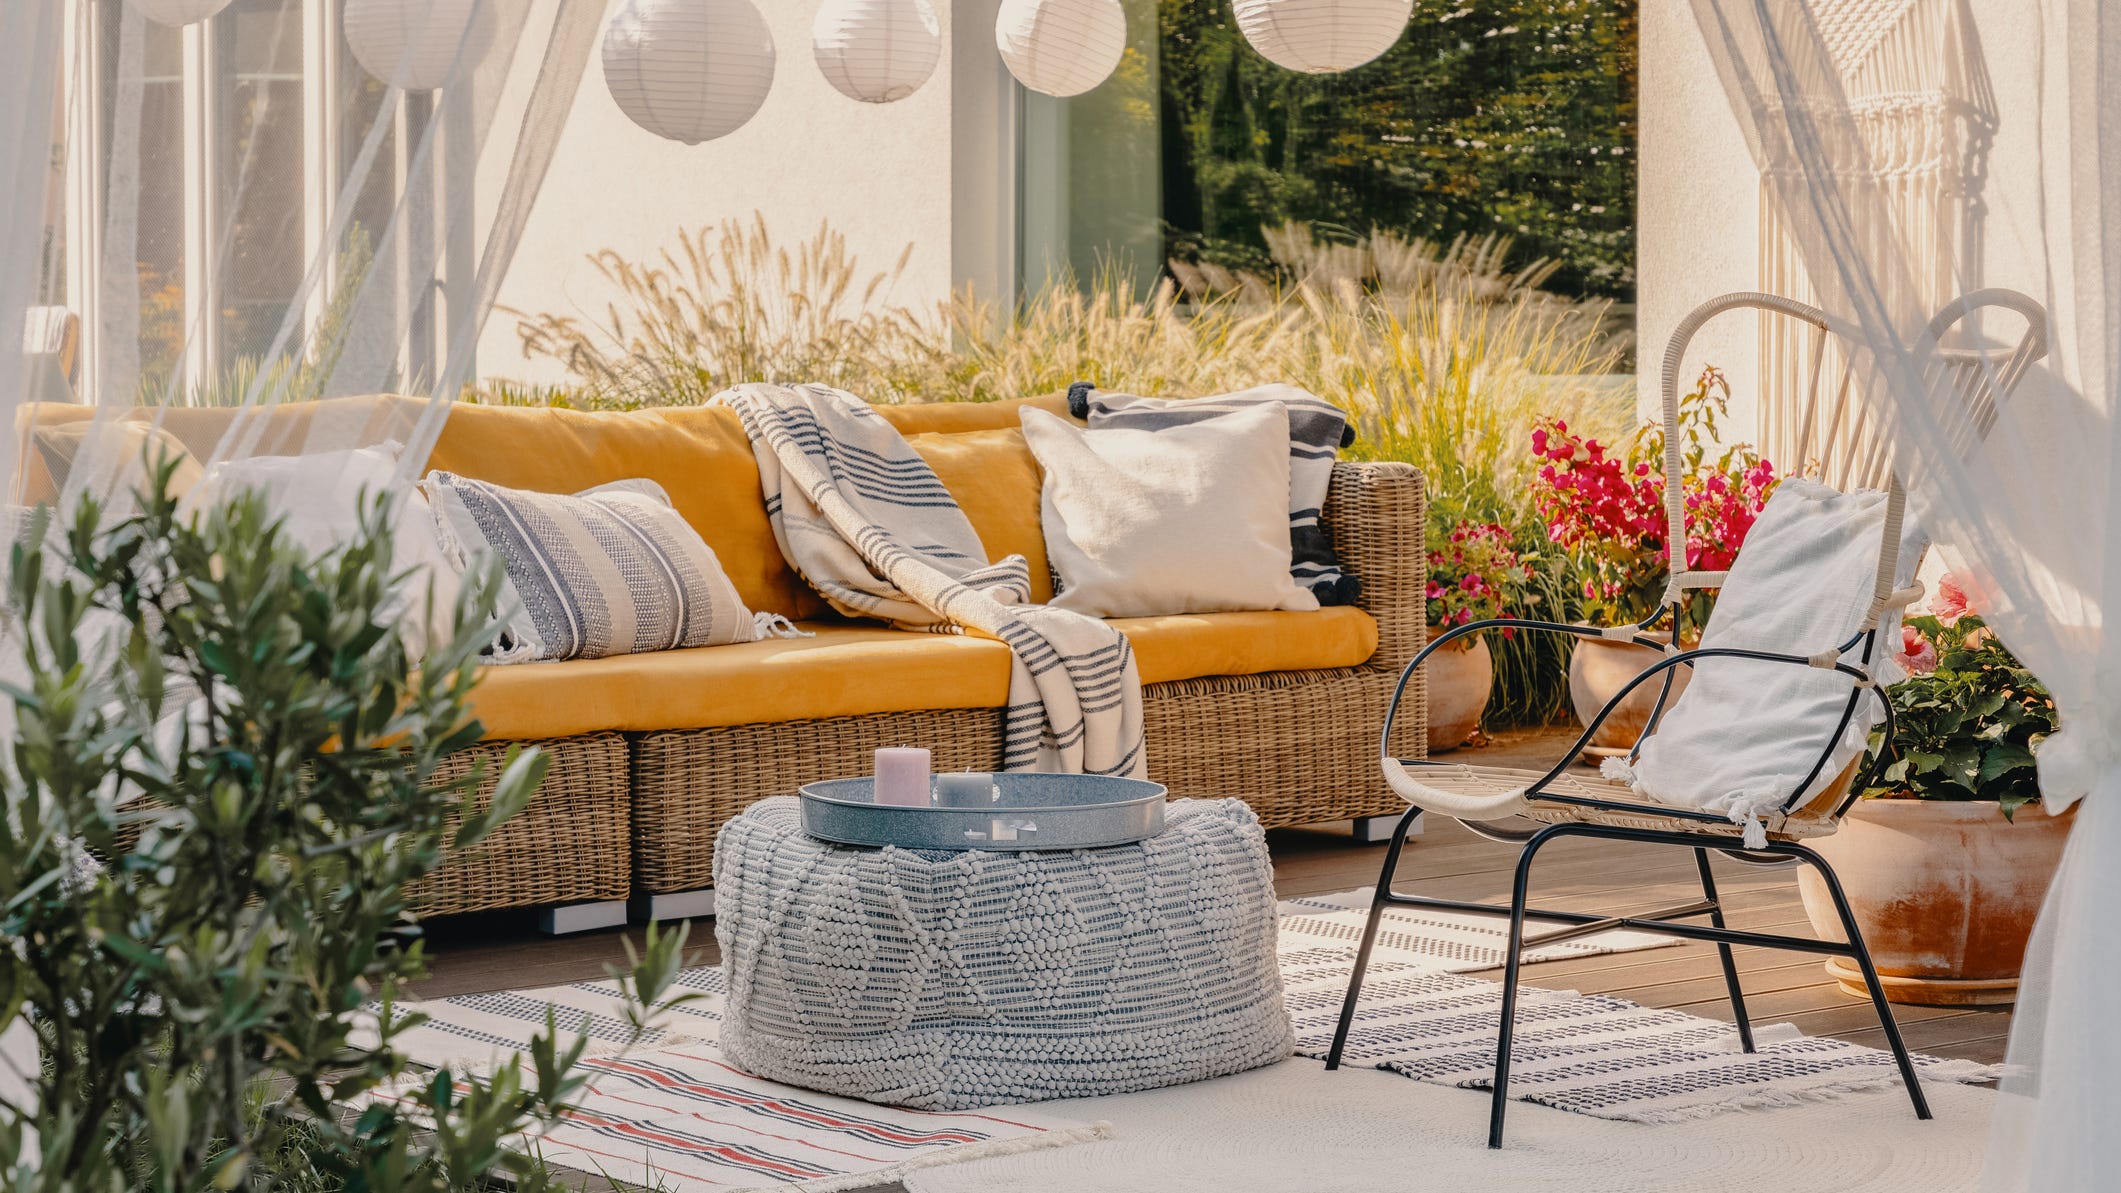 35 Inspiring Patio Ideas to Upgrade Your Outdoor Furniture & Decor -  Hayneedle